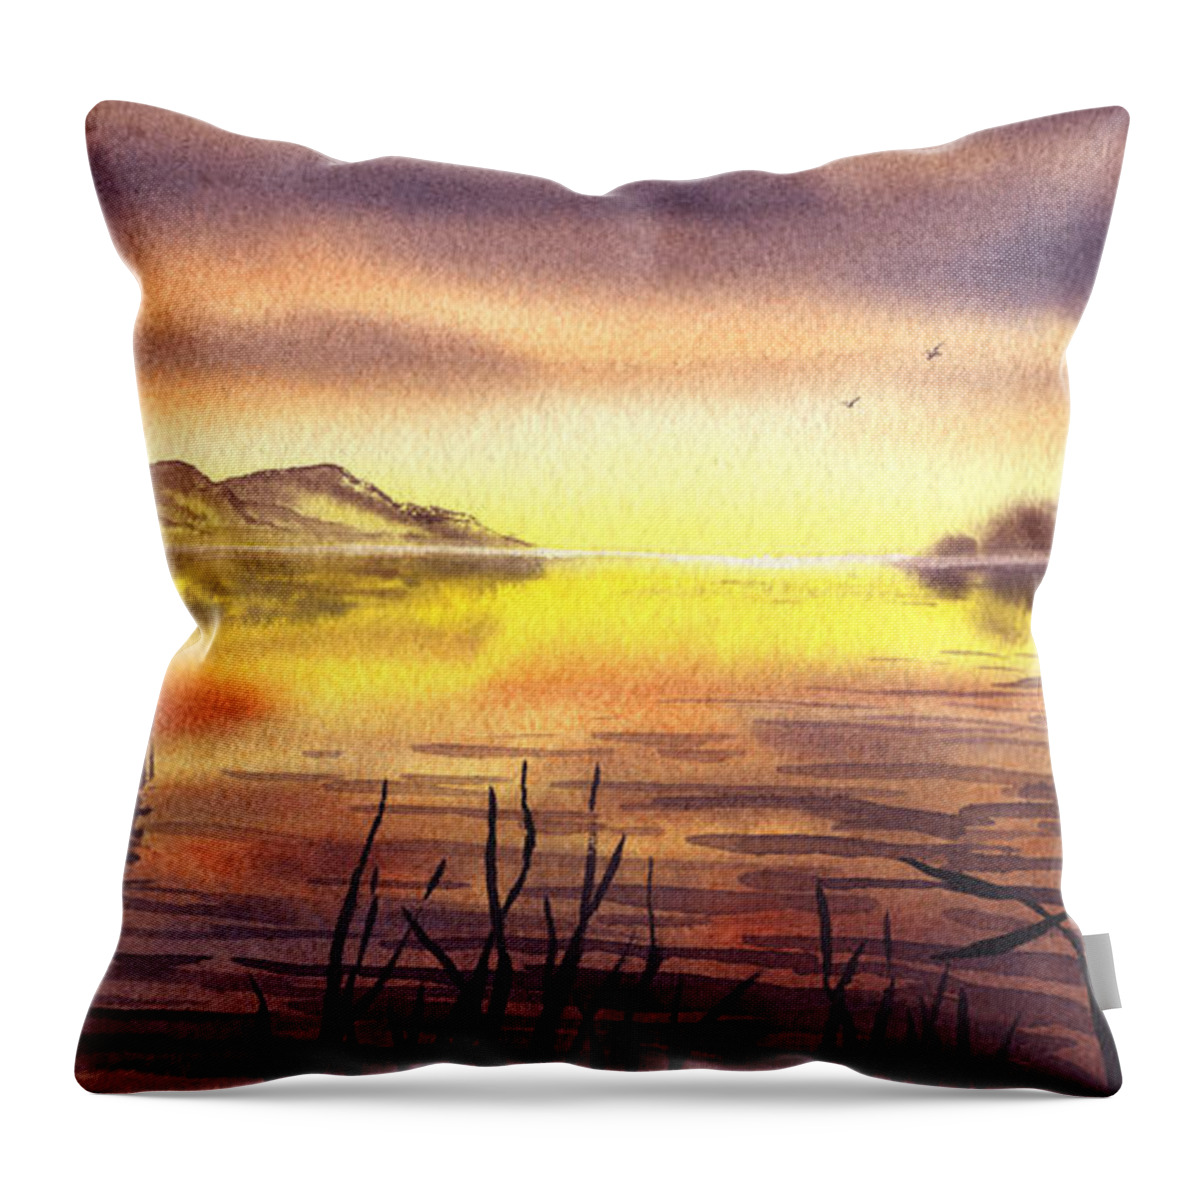 Peaceful Sunset At The Lake Throw Pillow featuring the painting Peaceful Sunset At The Lake by Irina Sztukowski